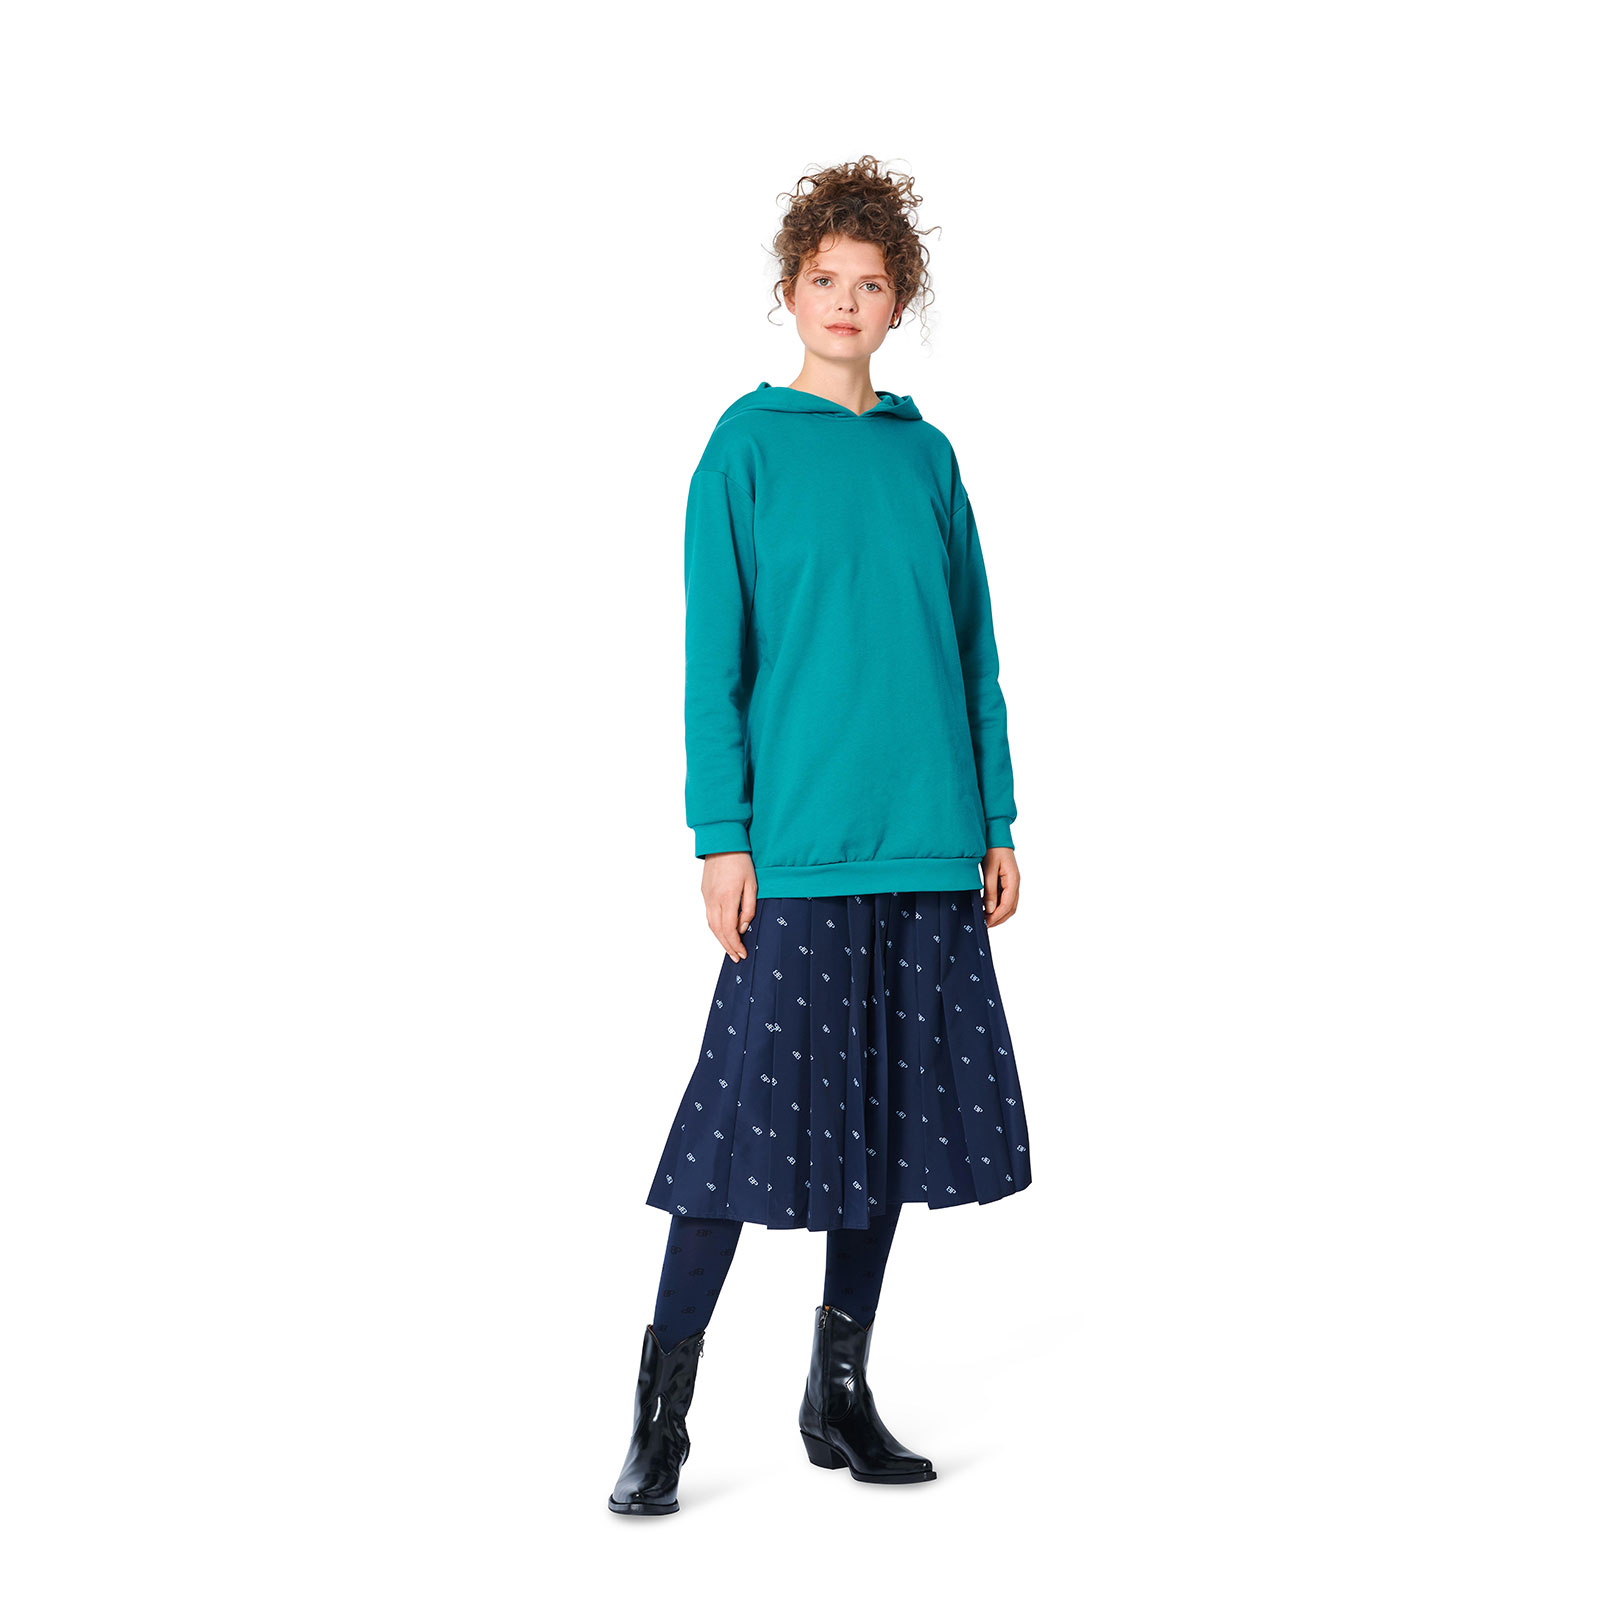 Burda Rood 5979 - Sweater in Variaties